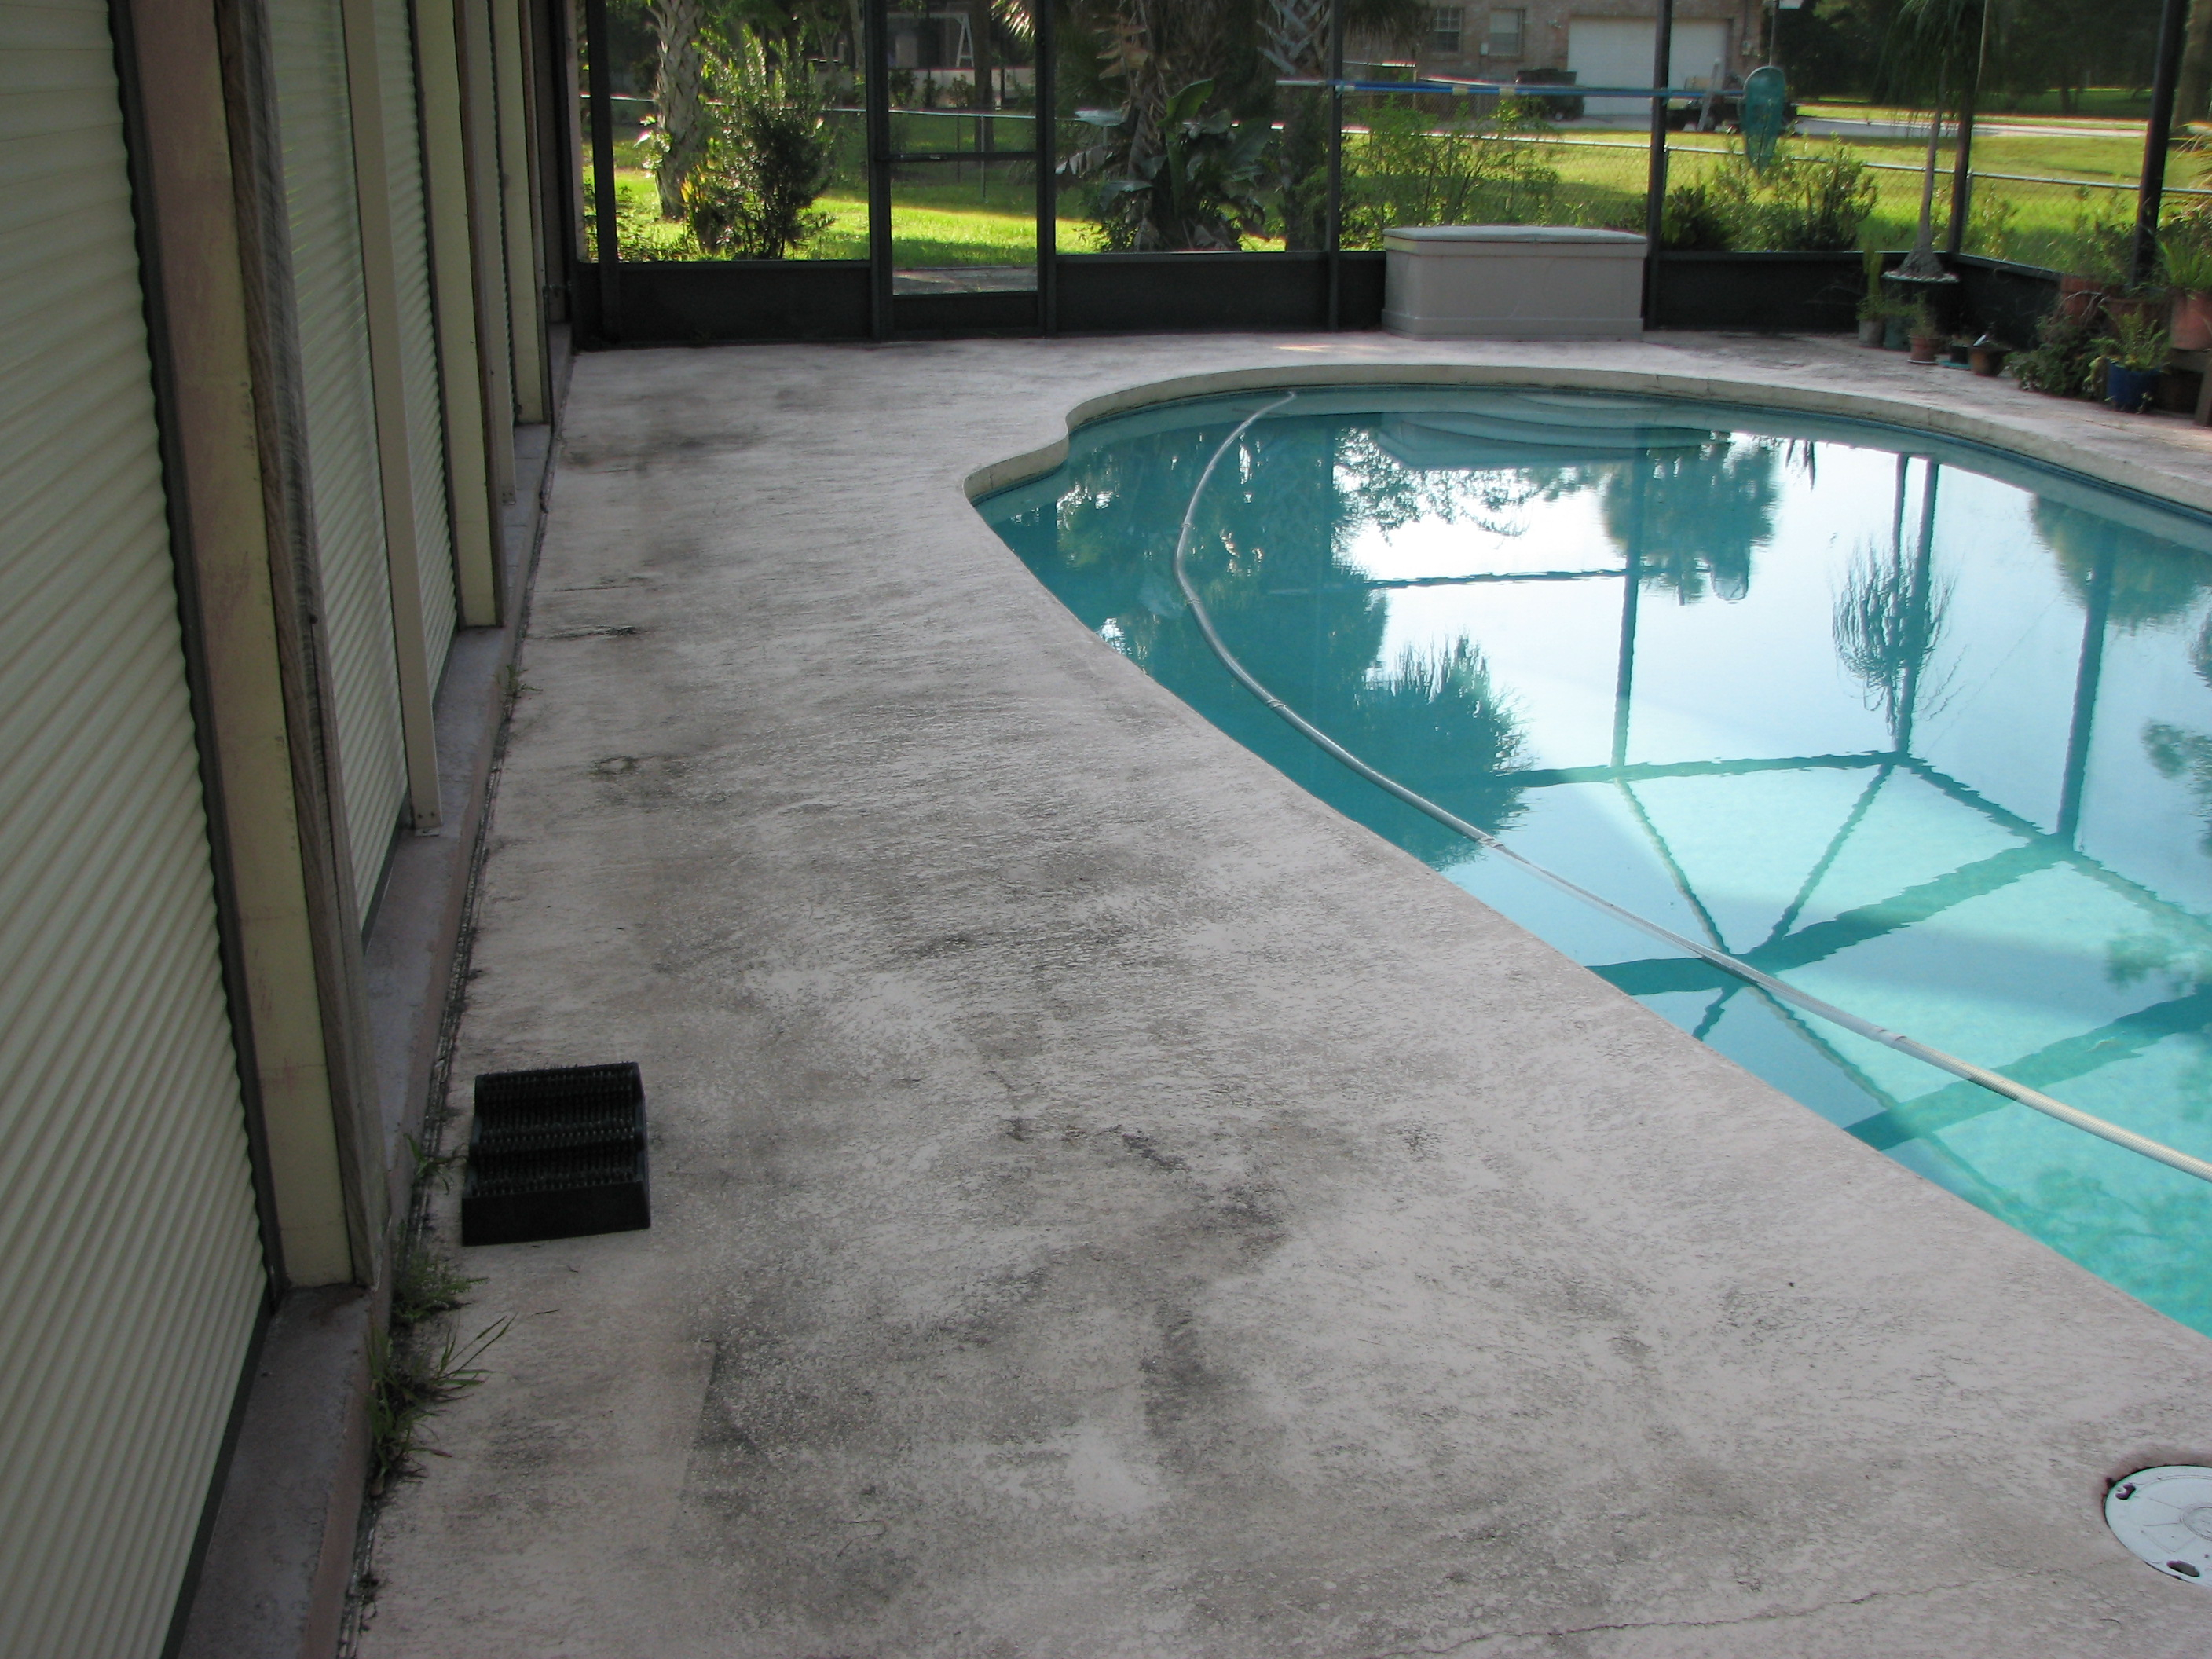 Pool Deck Repair Melbournefl Pool Deck Cracks Pooldeck Painting for dimensions 2816 X 2112